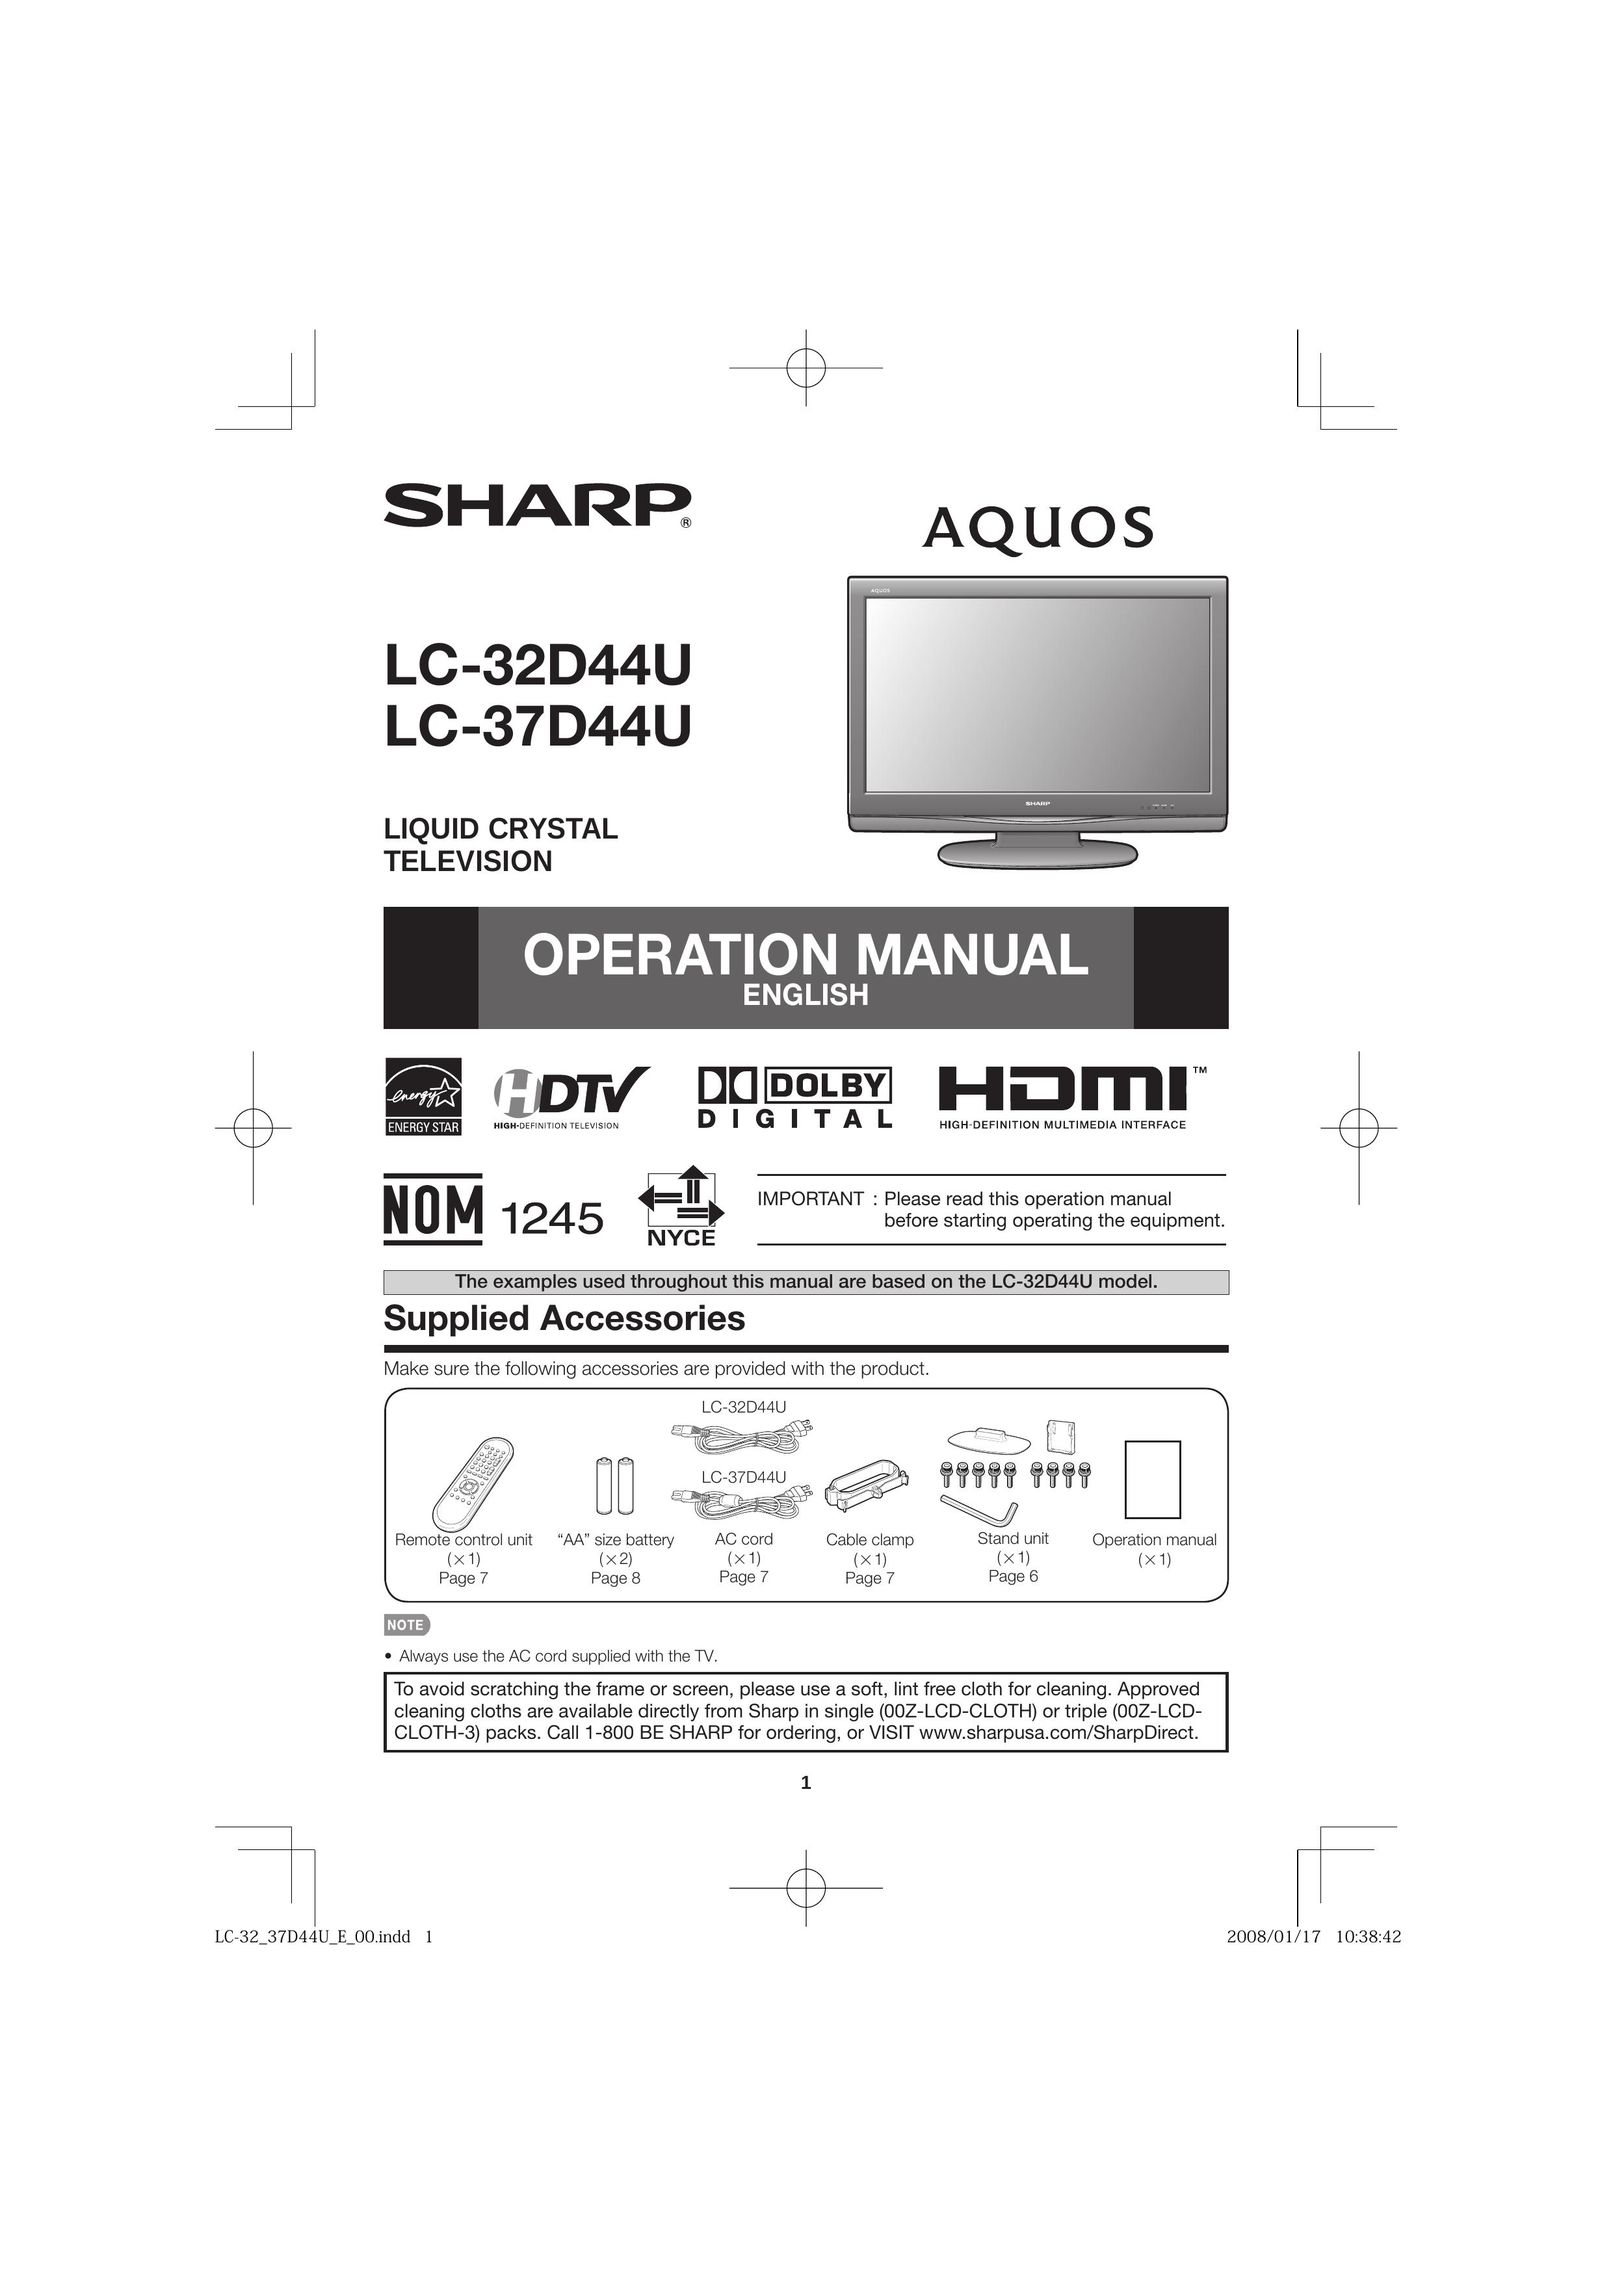 Nintendo LC-37D44U Flat Panel Television User Manual